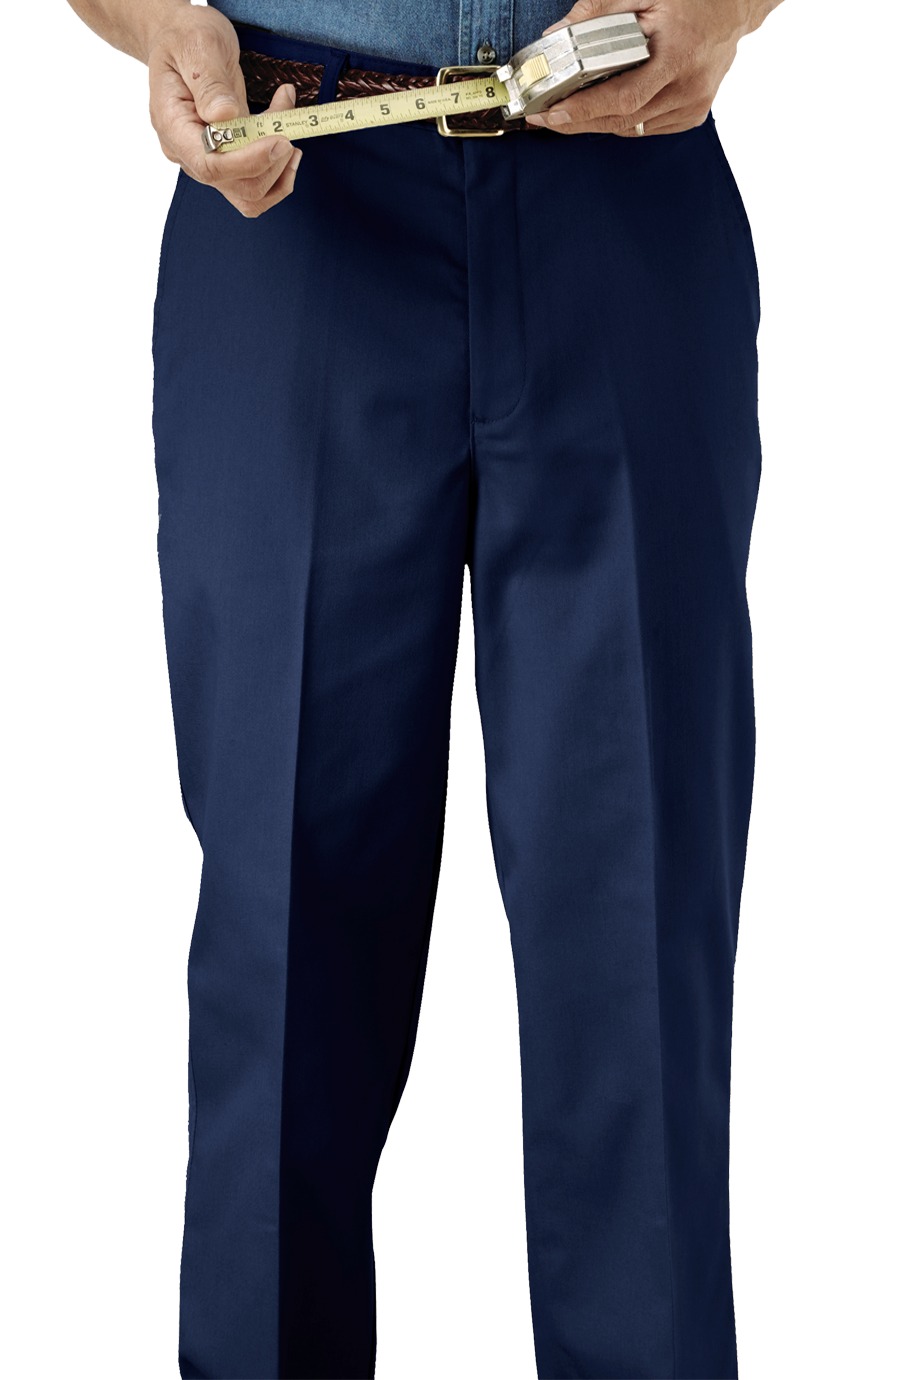 Edwards Garment 2577 - Men's Utility Flat Front Pant